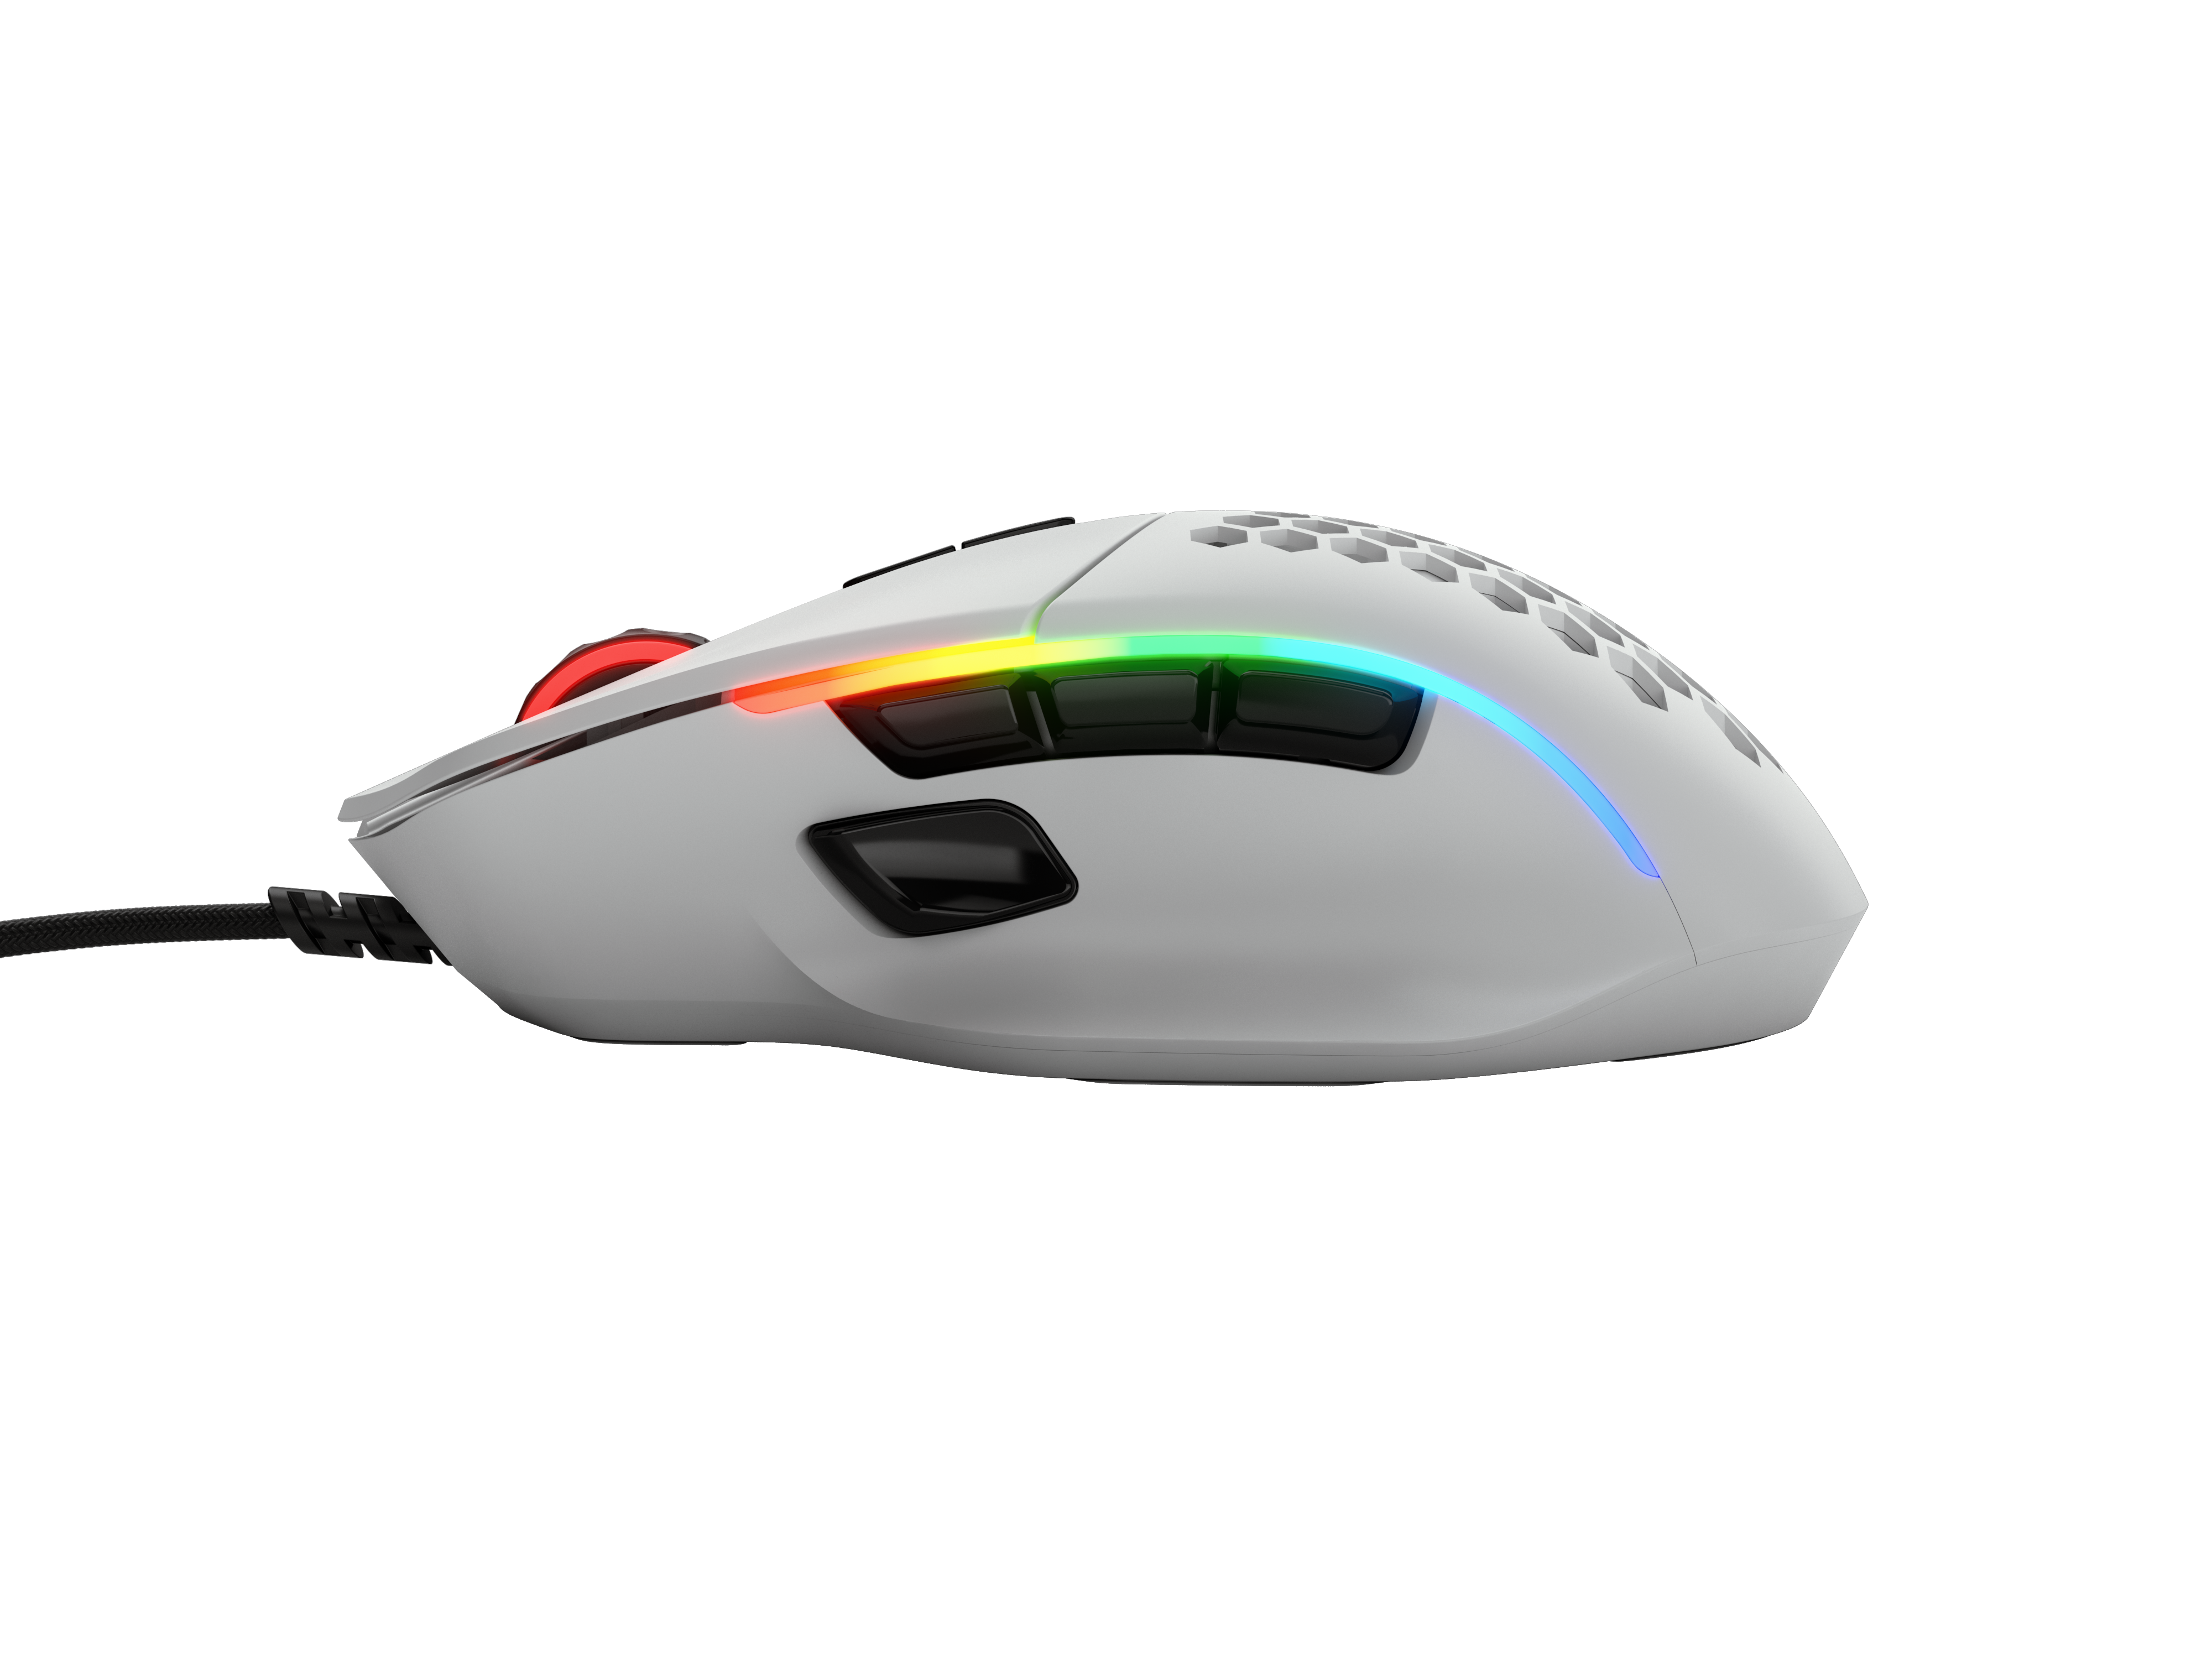 Glorious Model I Gaming Mouse - Vit